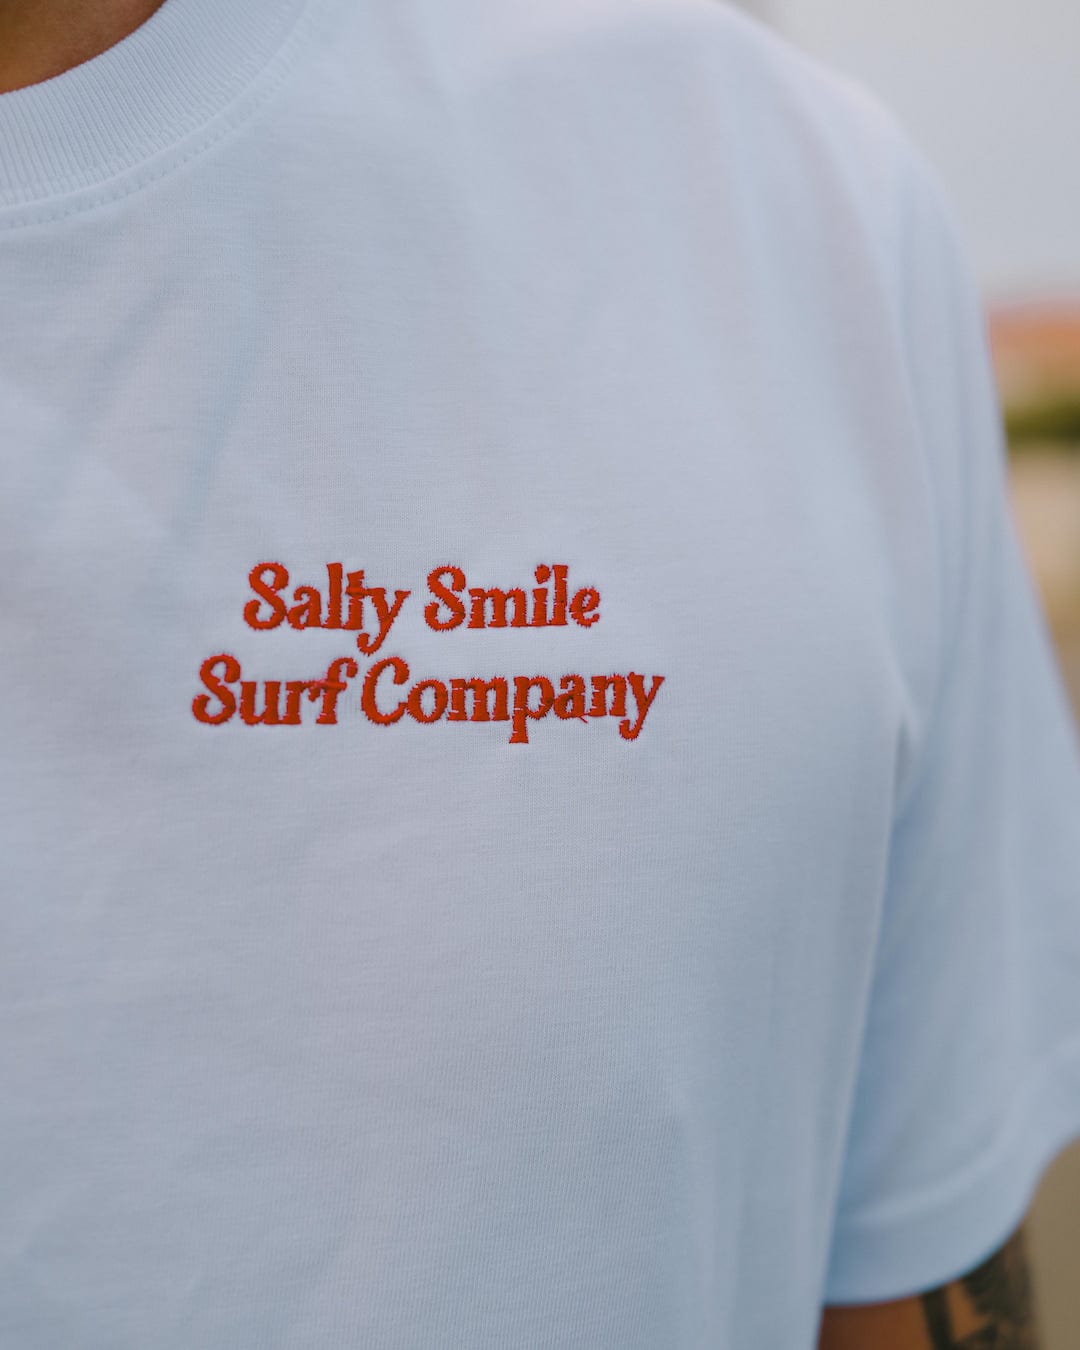 vetements surf salty smile T Shirt Surf Company Blanc marque eco responsable coton bio